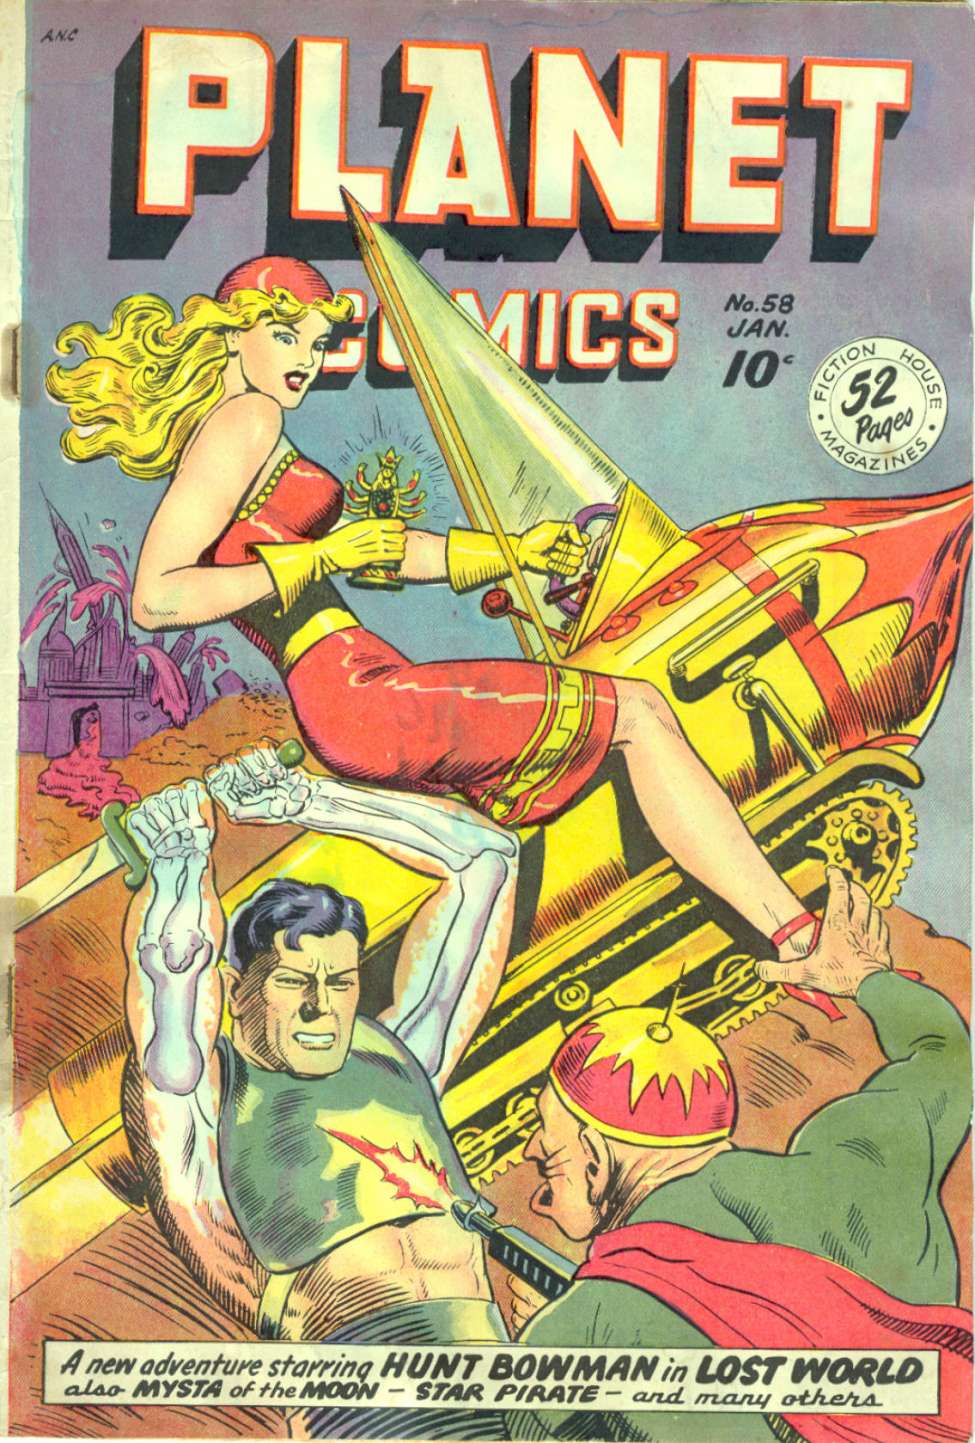 Planet Comics #58, Fiction House